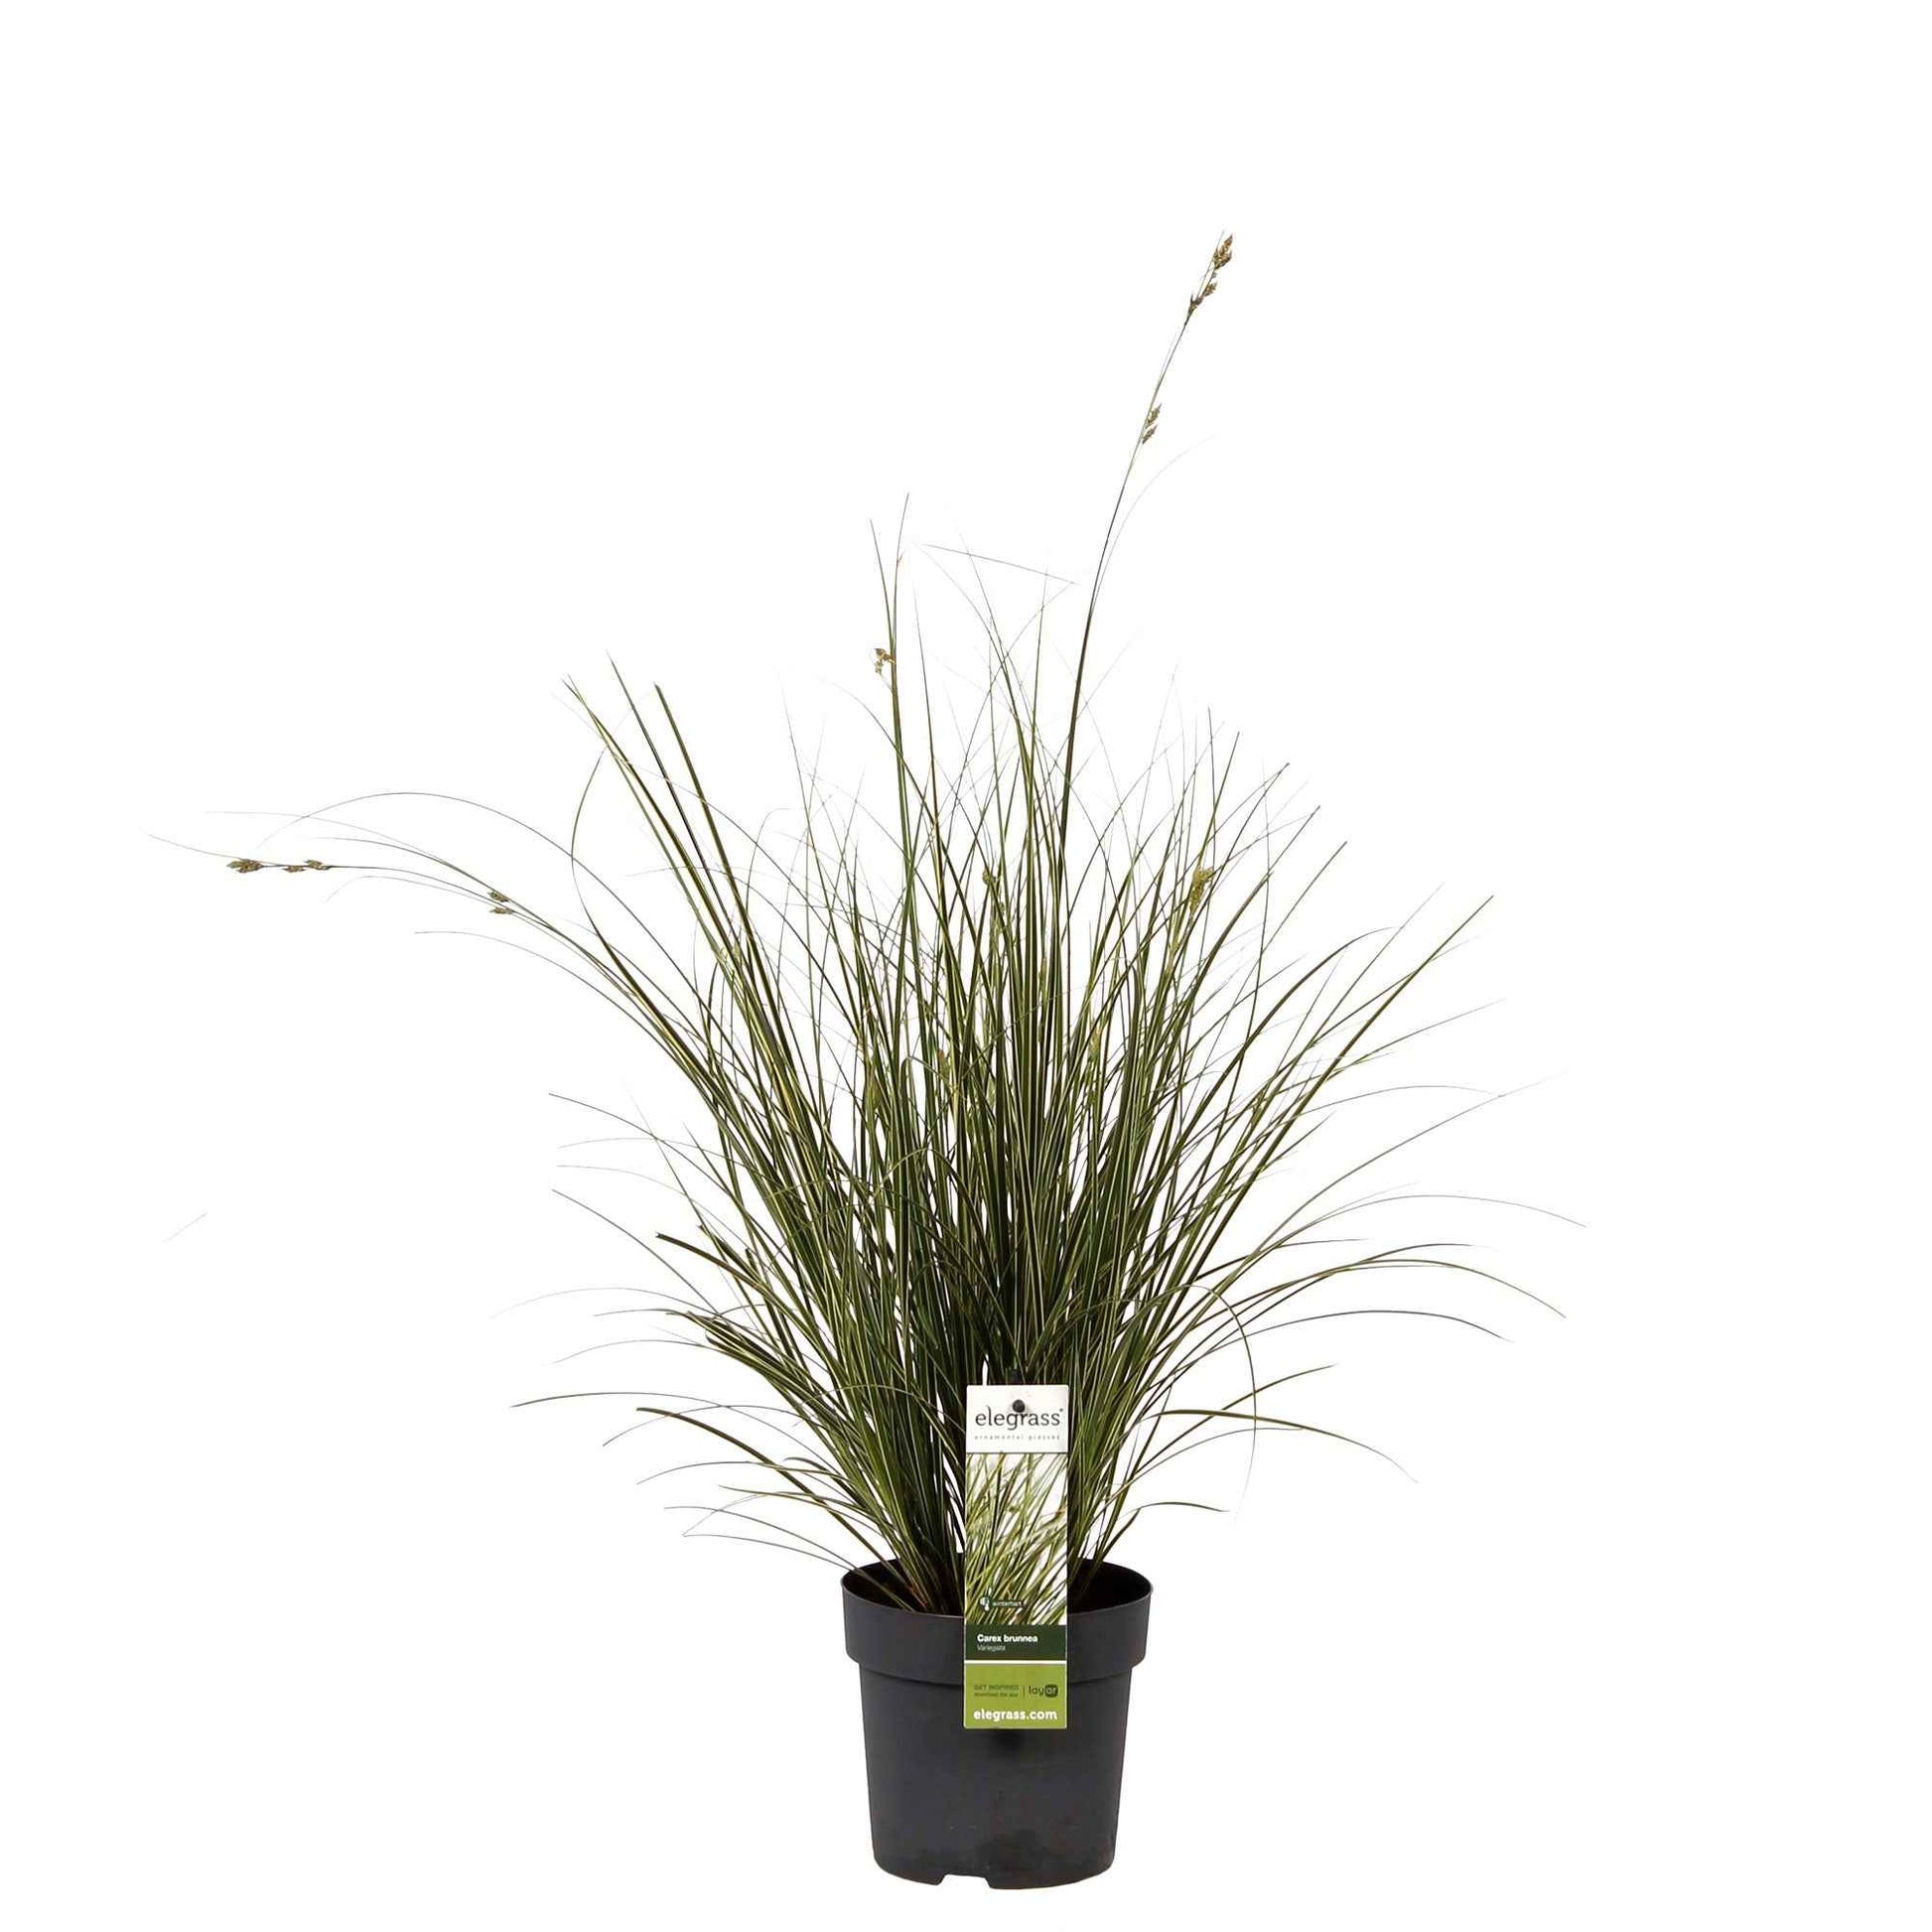 Carex 'Variegata' - Carex morrowii variegata - Zegge - Carex